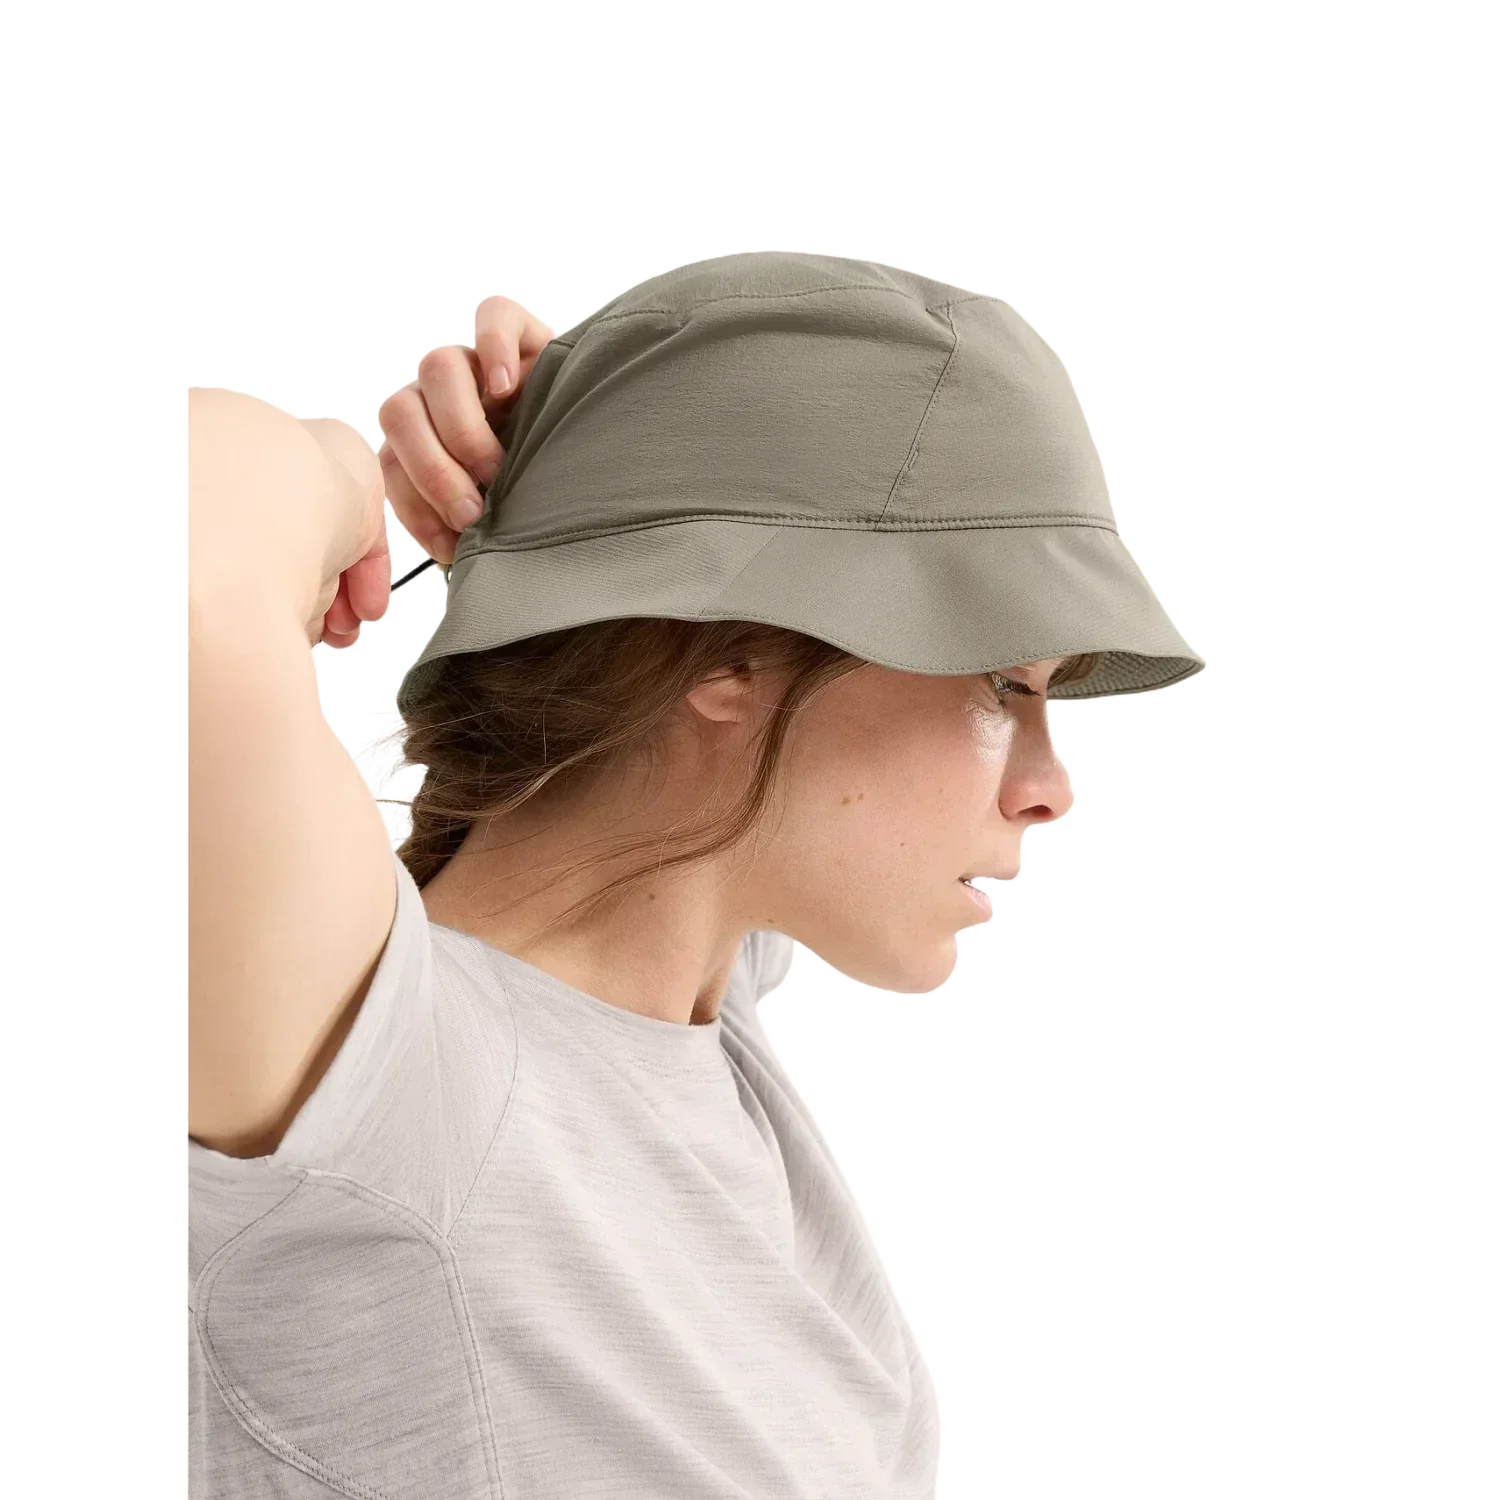 Arc'teryx HATS - HATS SUN - HATS SUN Aerios Bucket Hat 018570 FORAGE